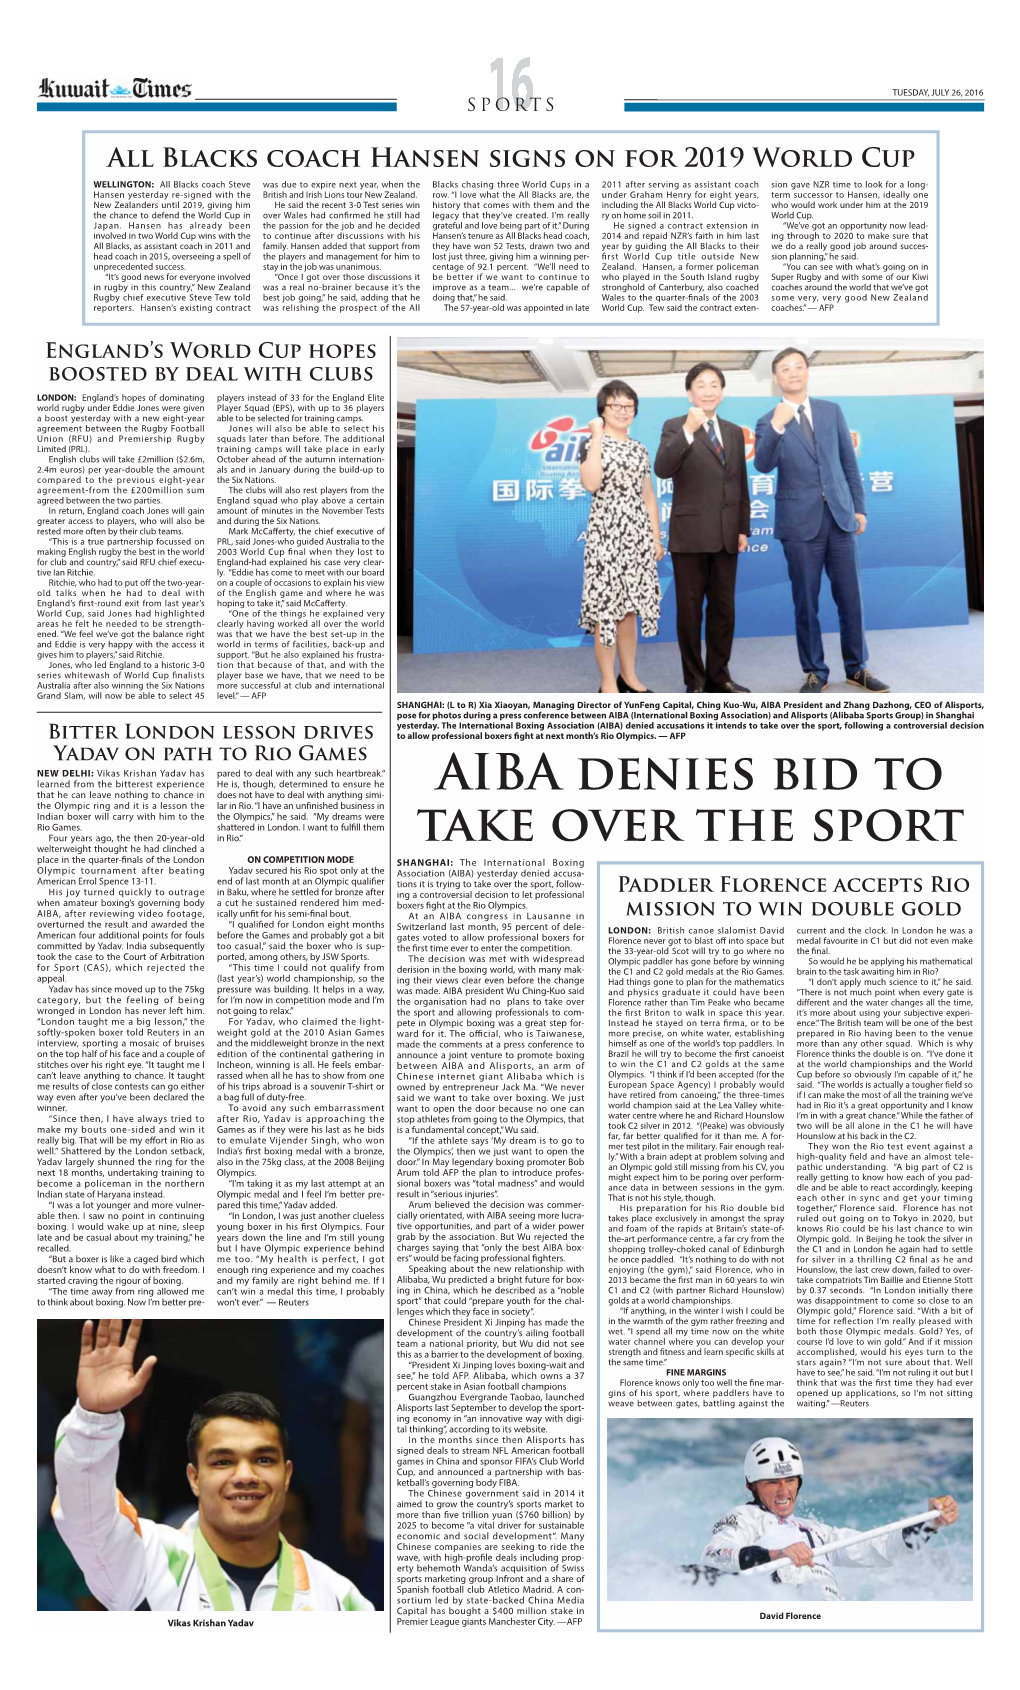 AIBA Denies Bid to Take Over the Sport